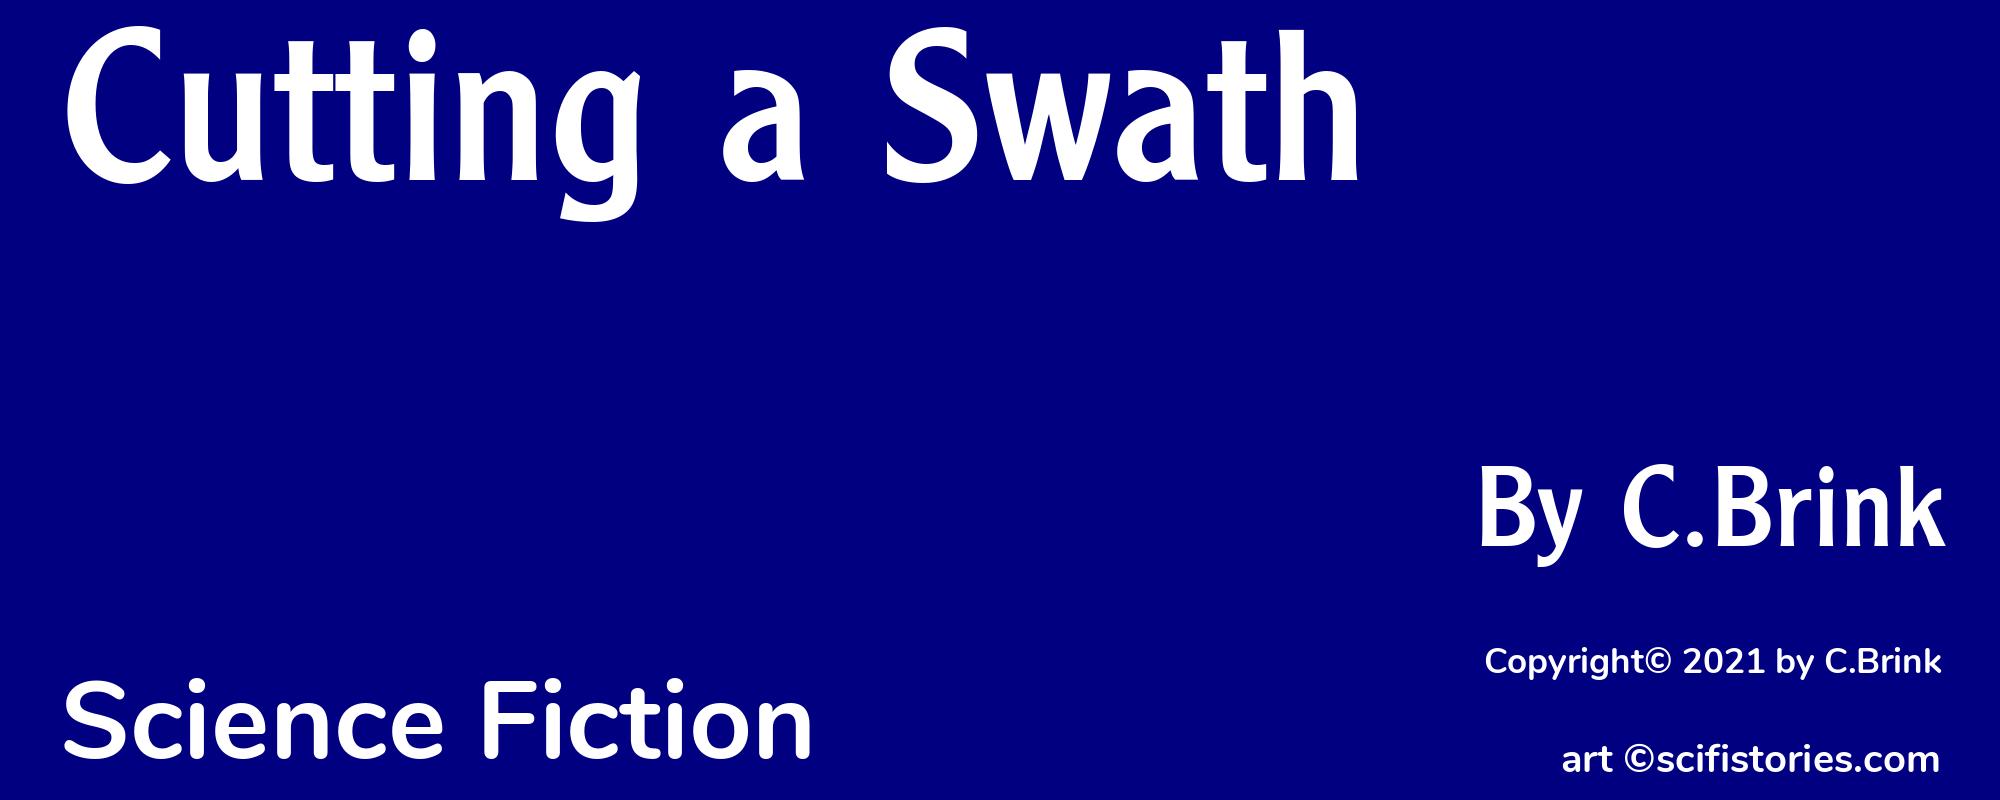 Cutting a Swath - Cover